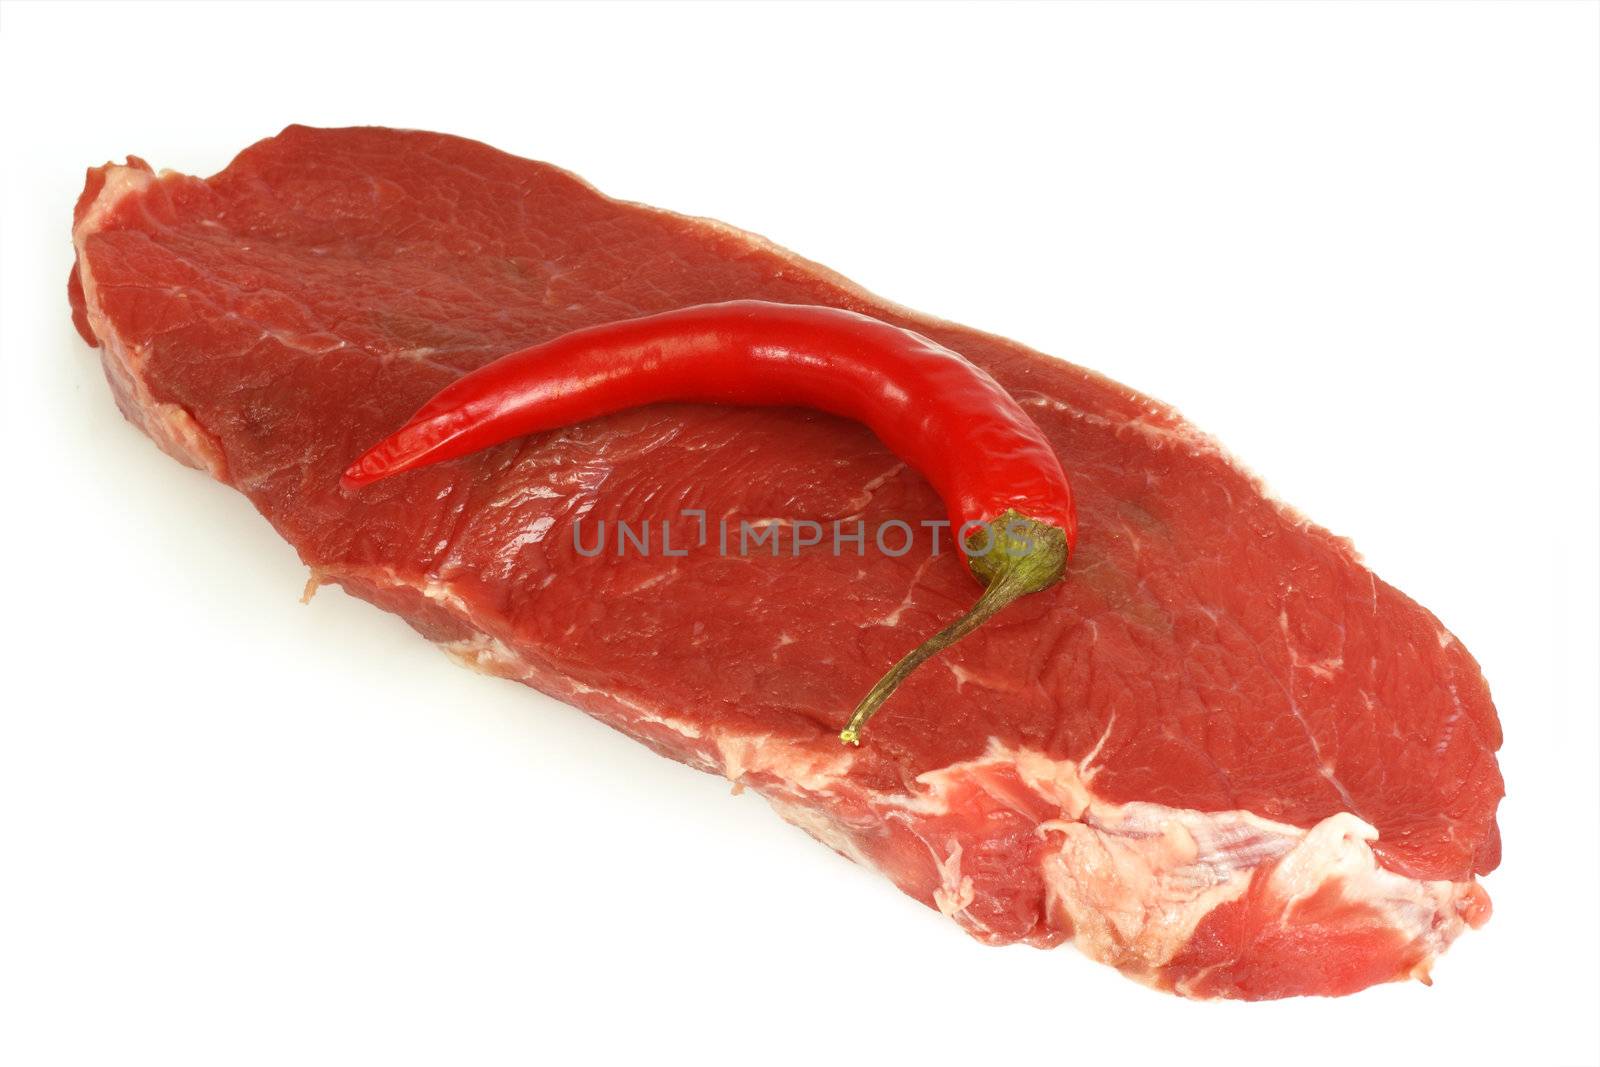 A prime cut of a raw ribeye beef steak. 